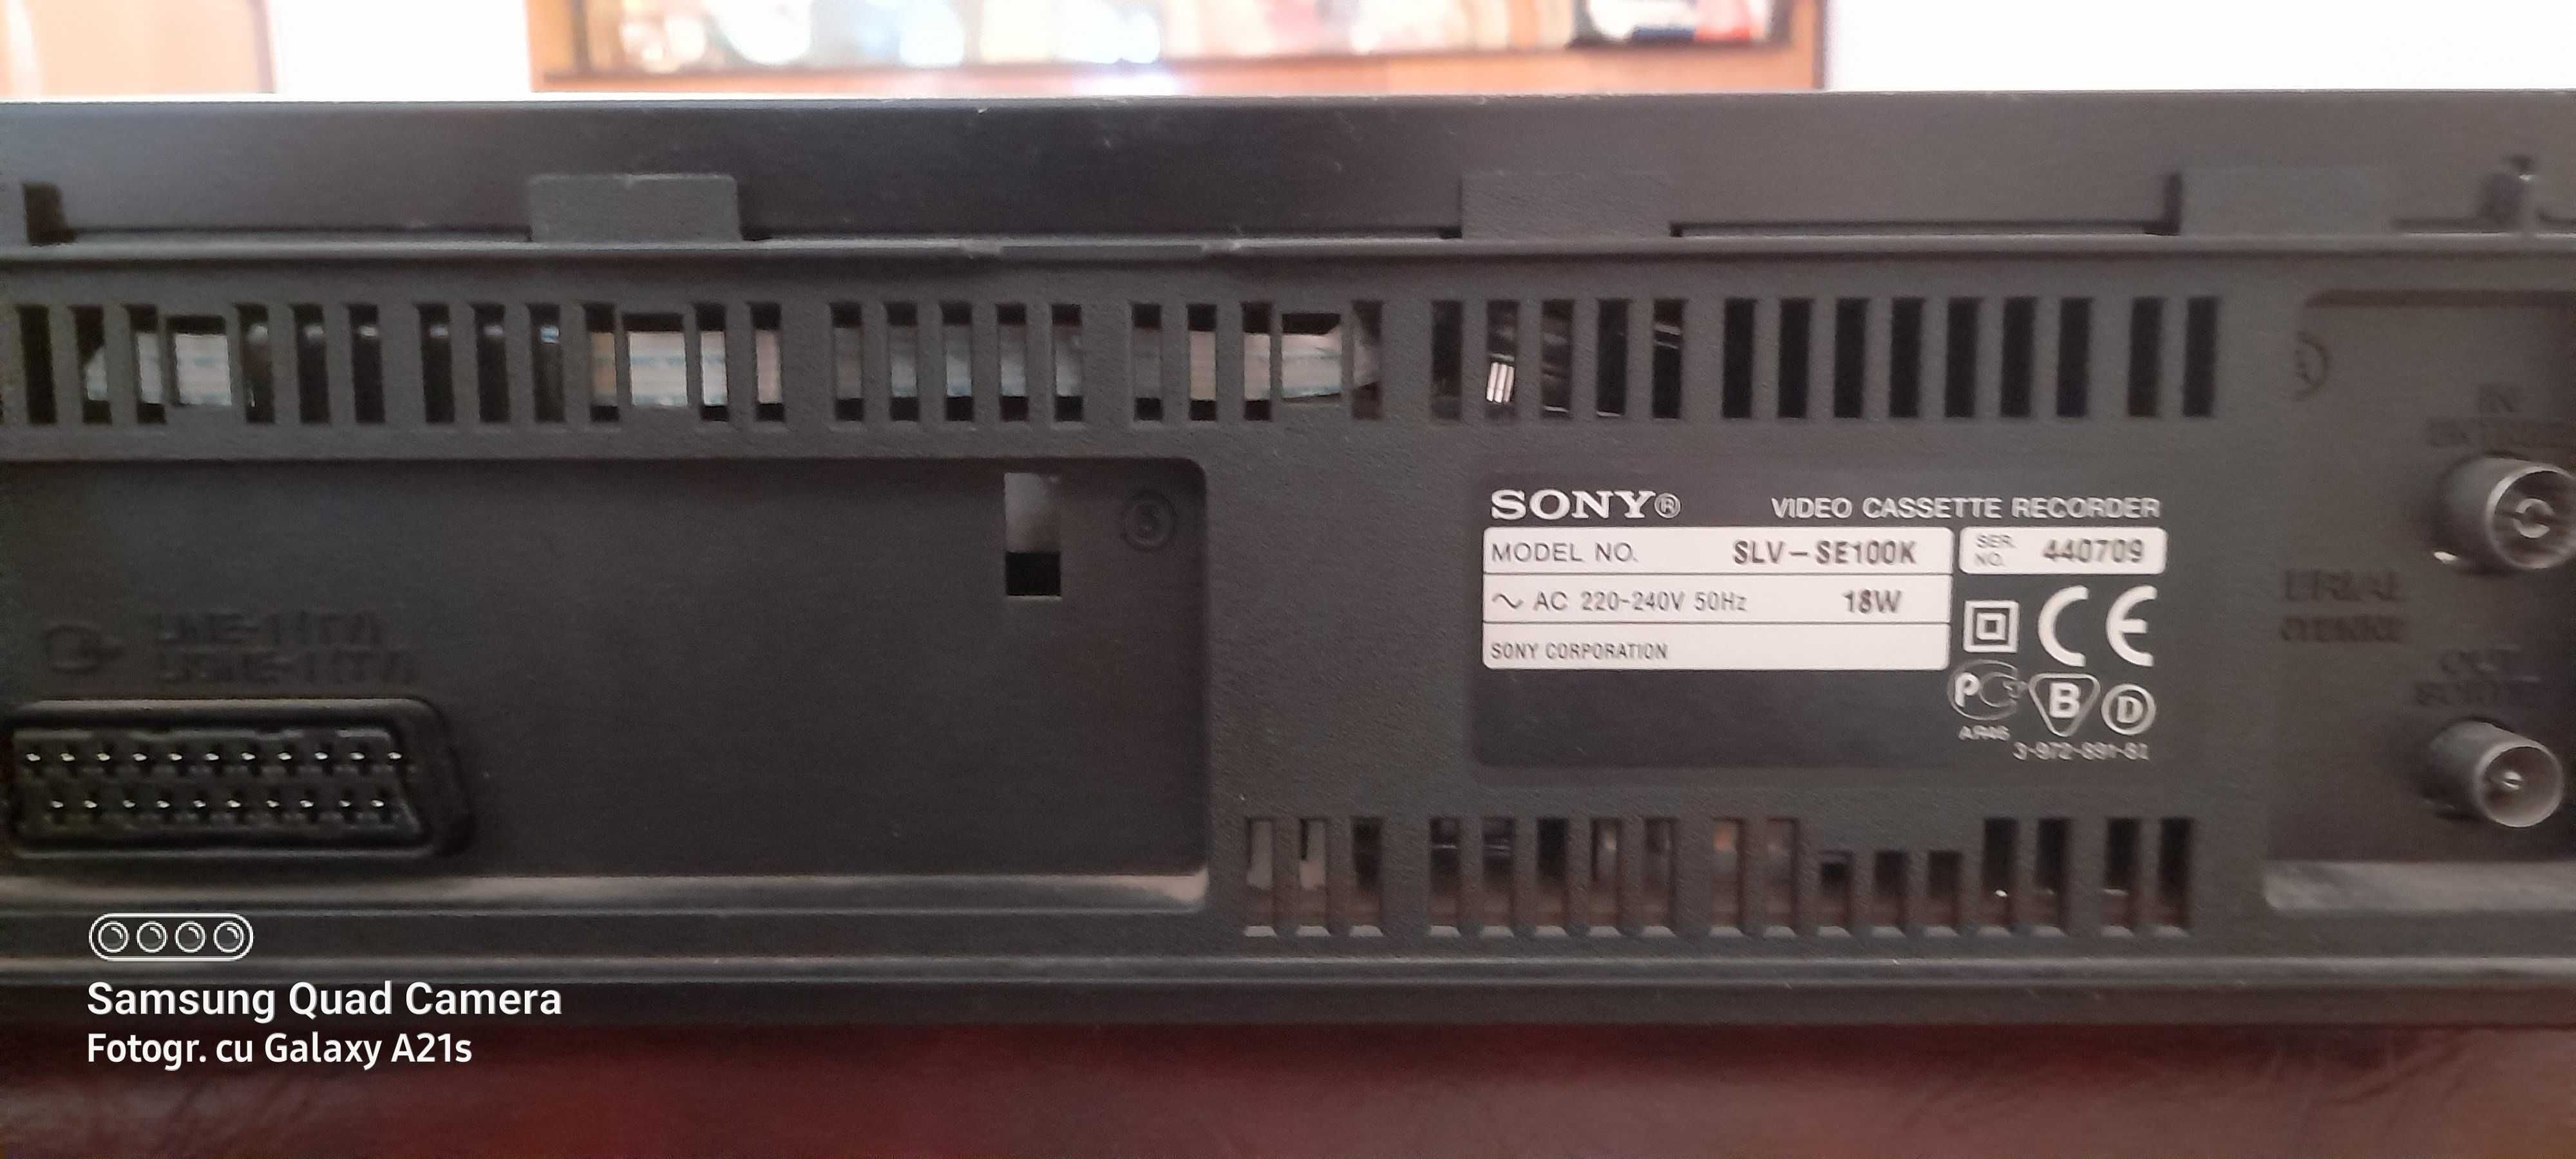 SONY-Video Cassette Recorder